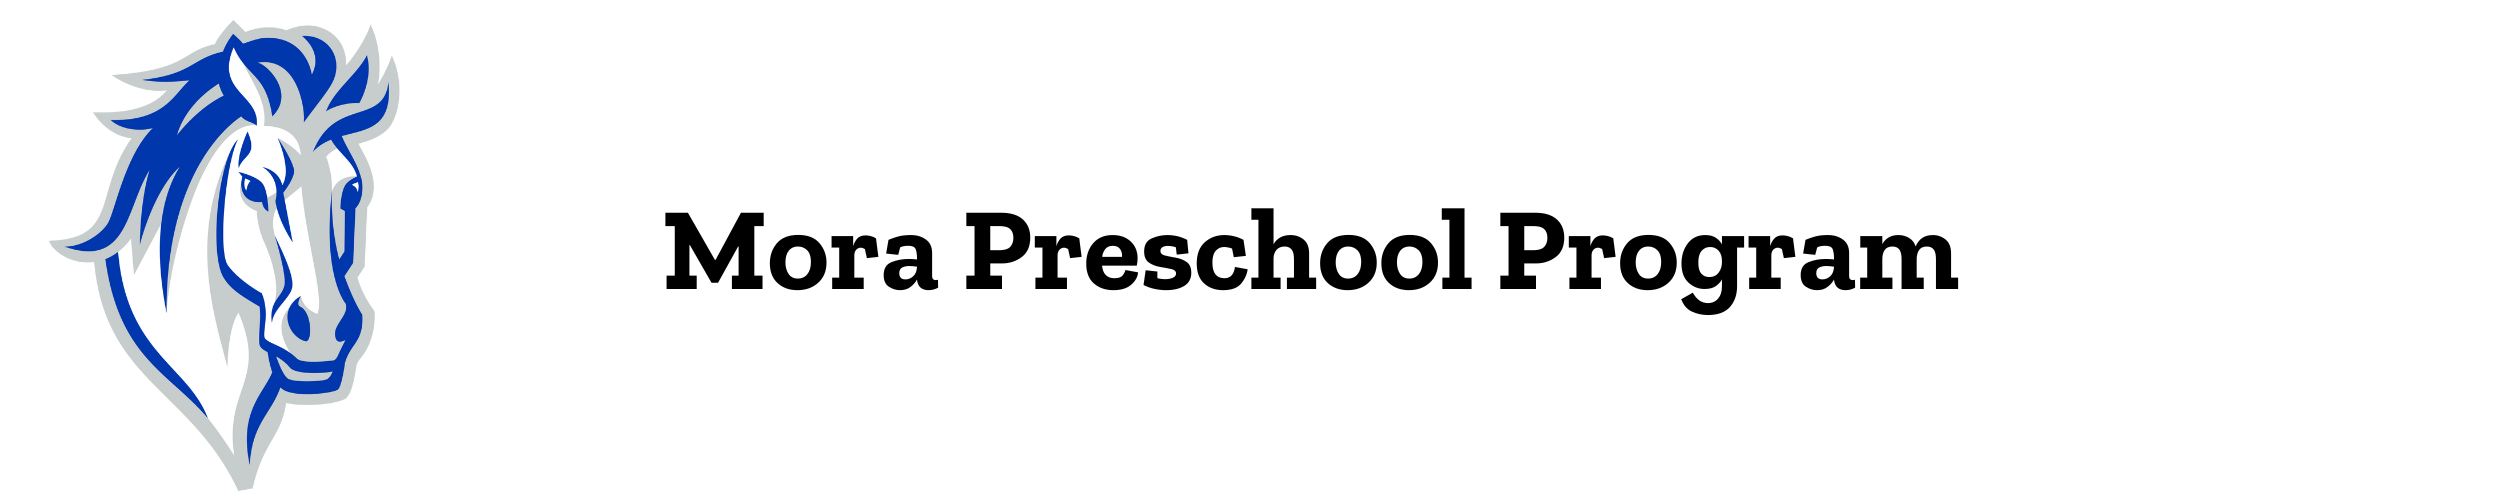 Mora mustang logo with preschool program